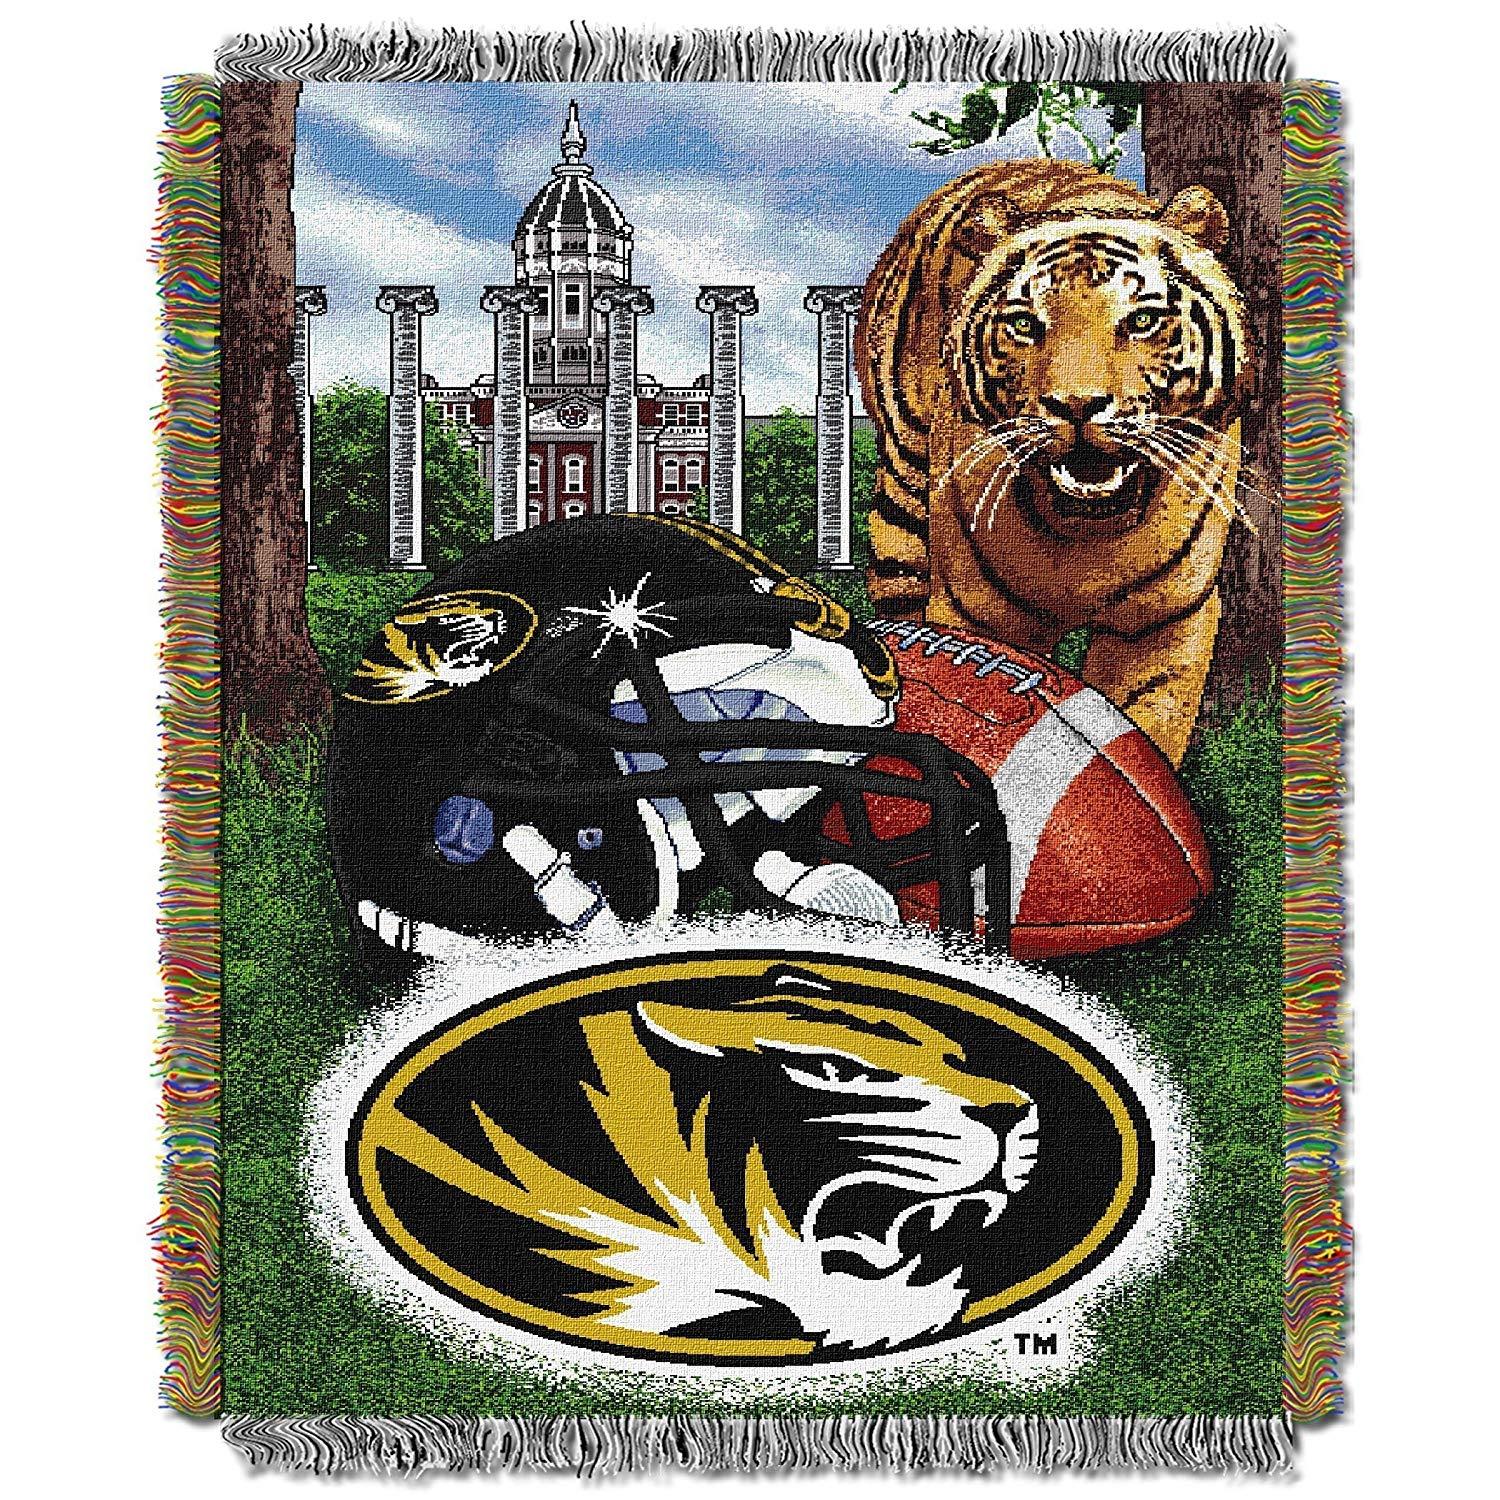 Black and Yellow Wildcats Logo - Amazon.com: N-A 1 Piece 48 x 60 NCAA Wildcats Throw Blanket, Black ...